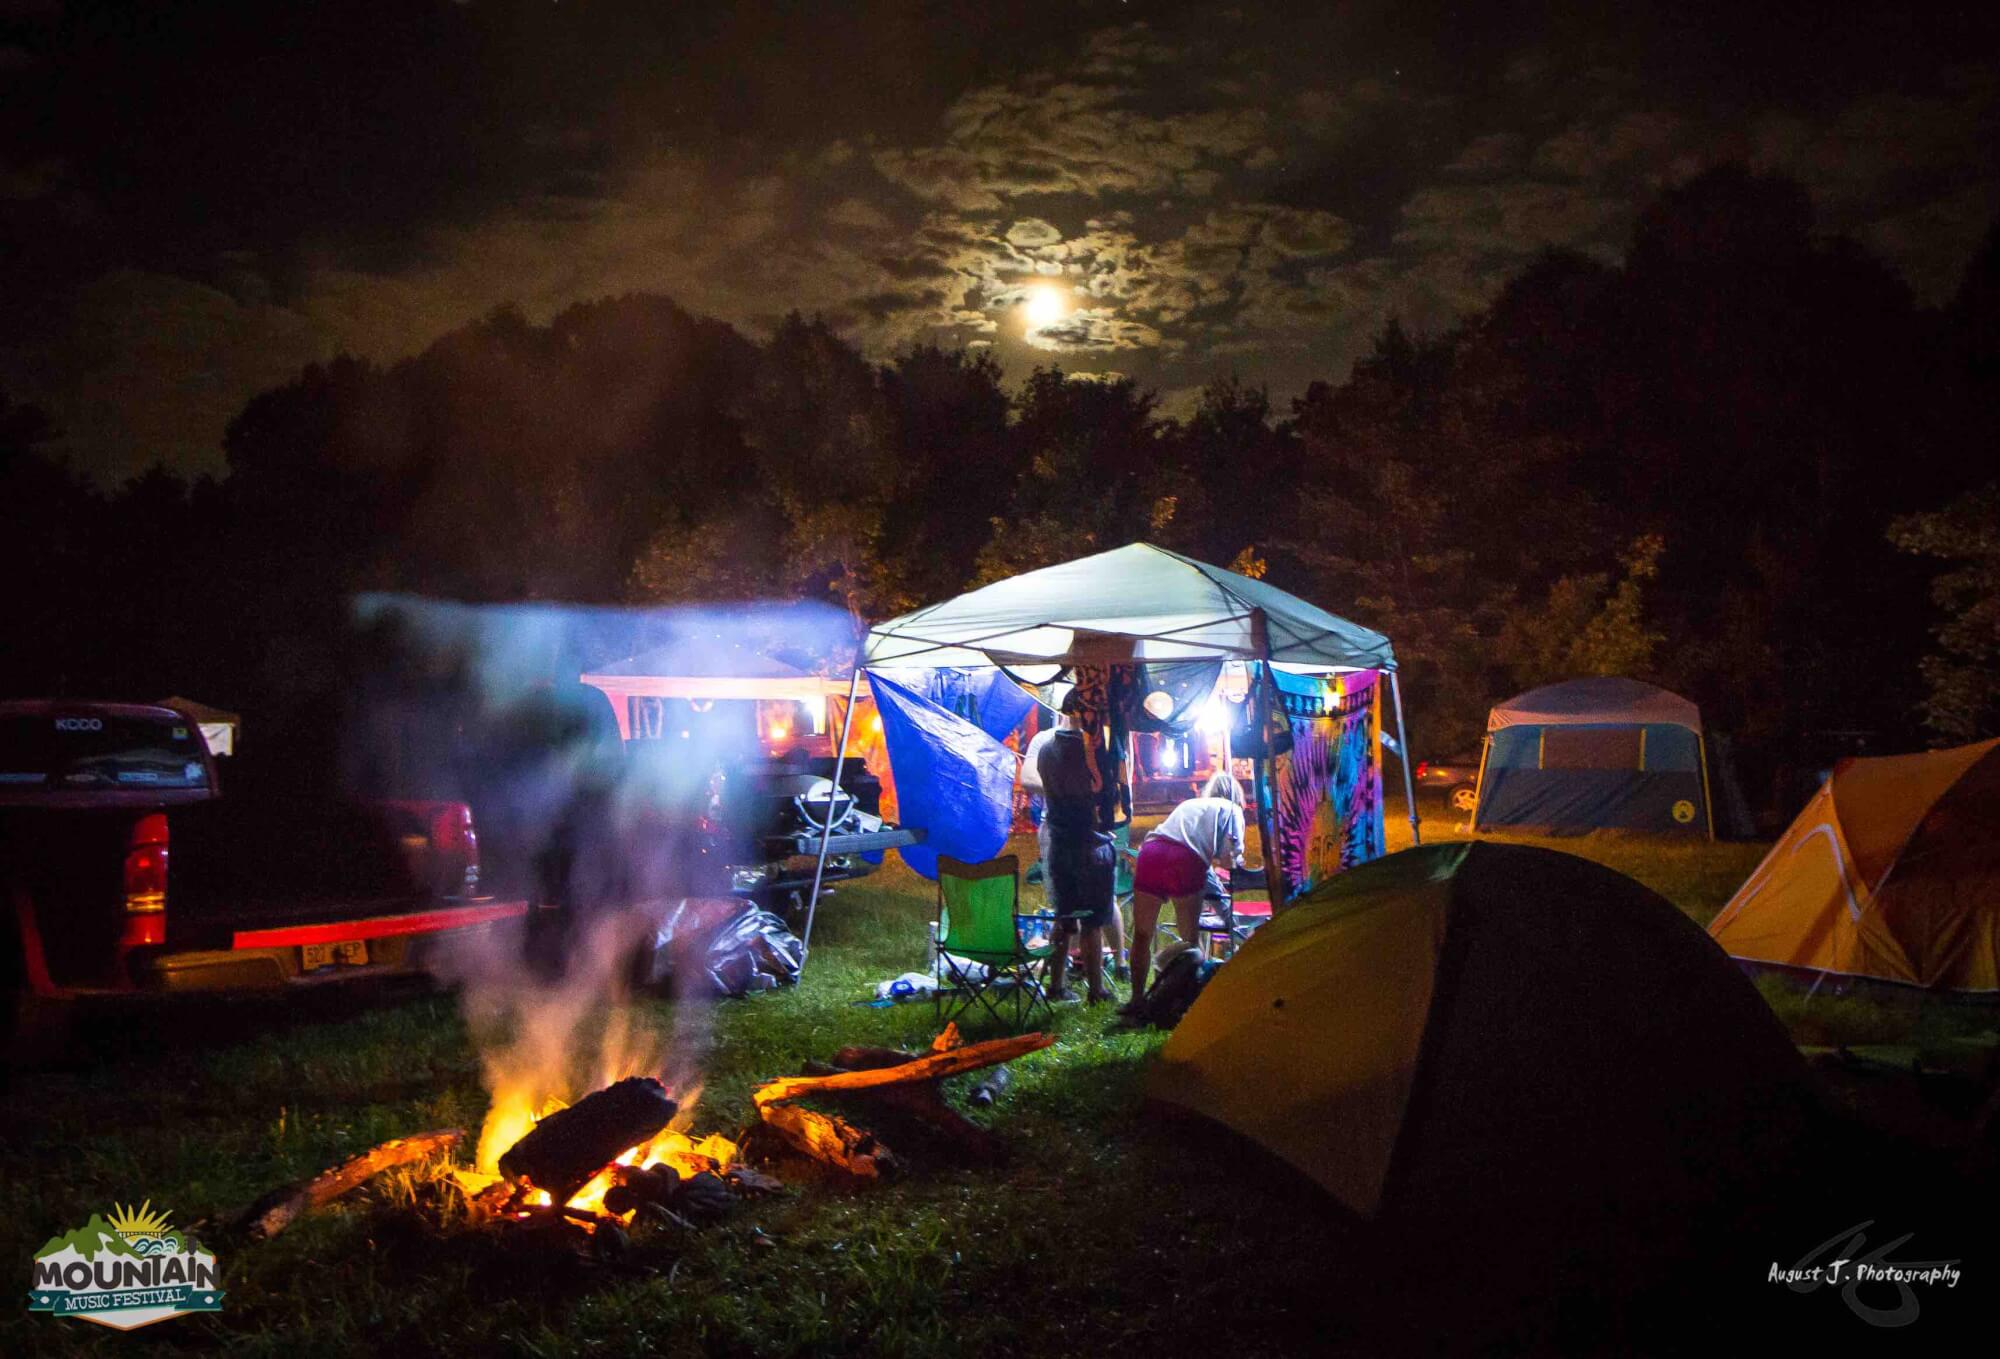 camping night shot at mountain music festival